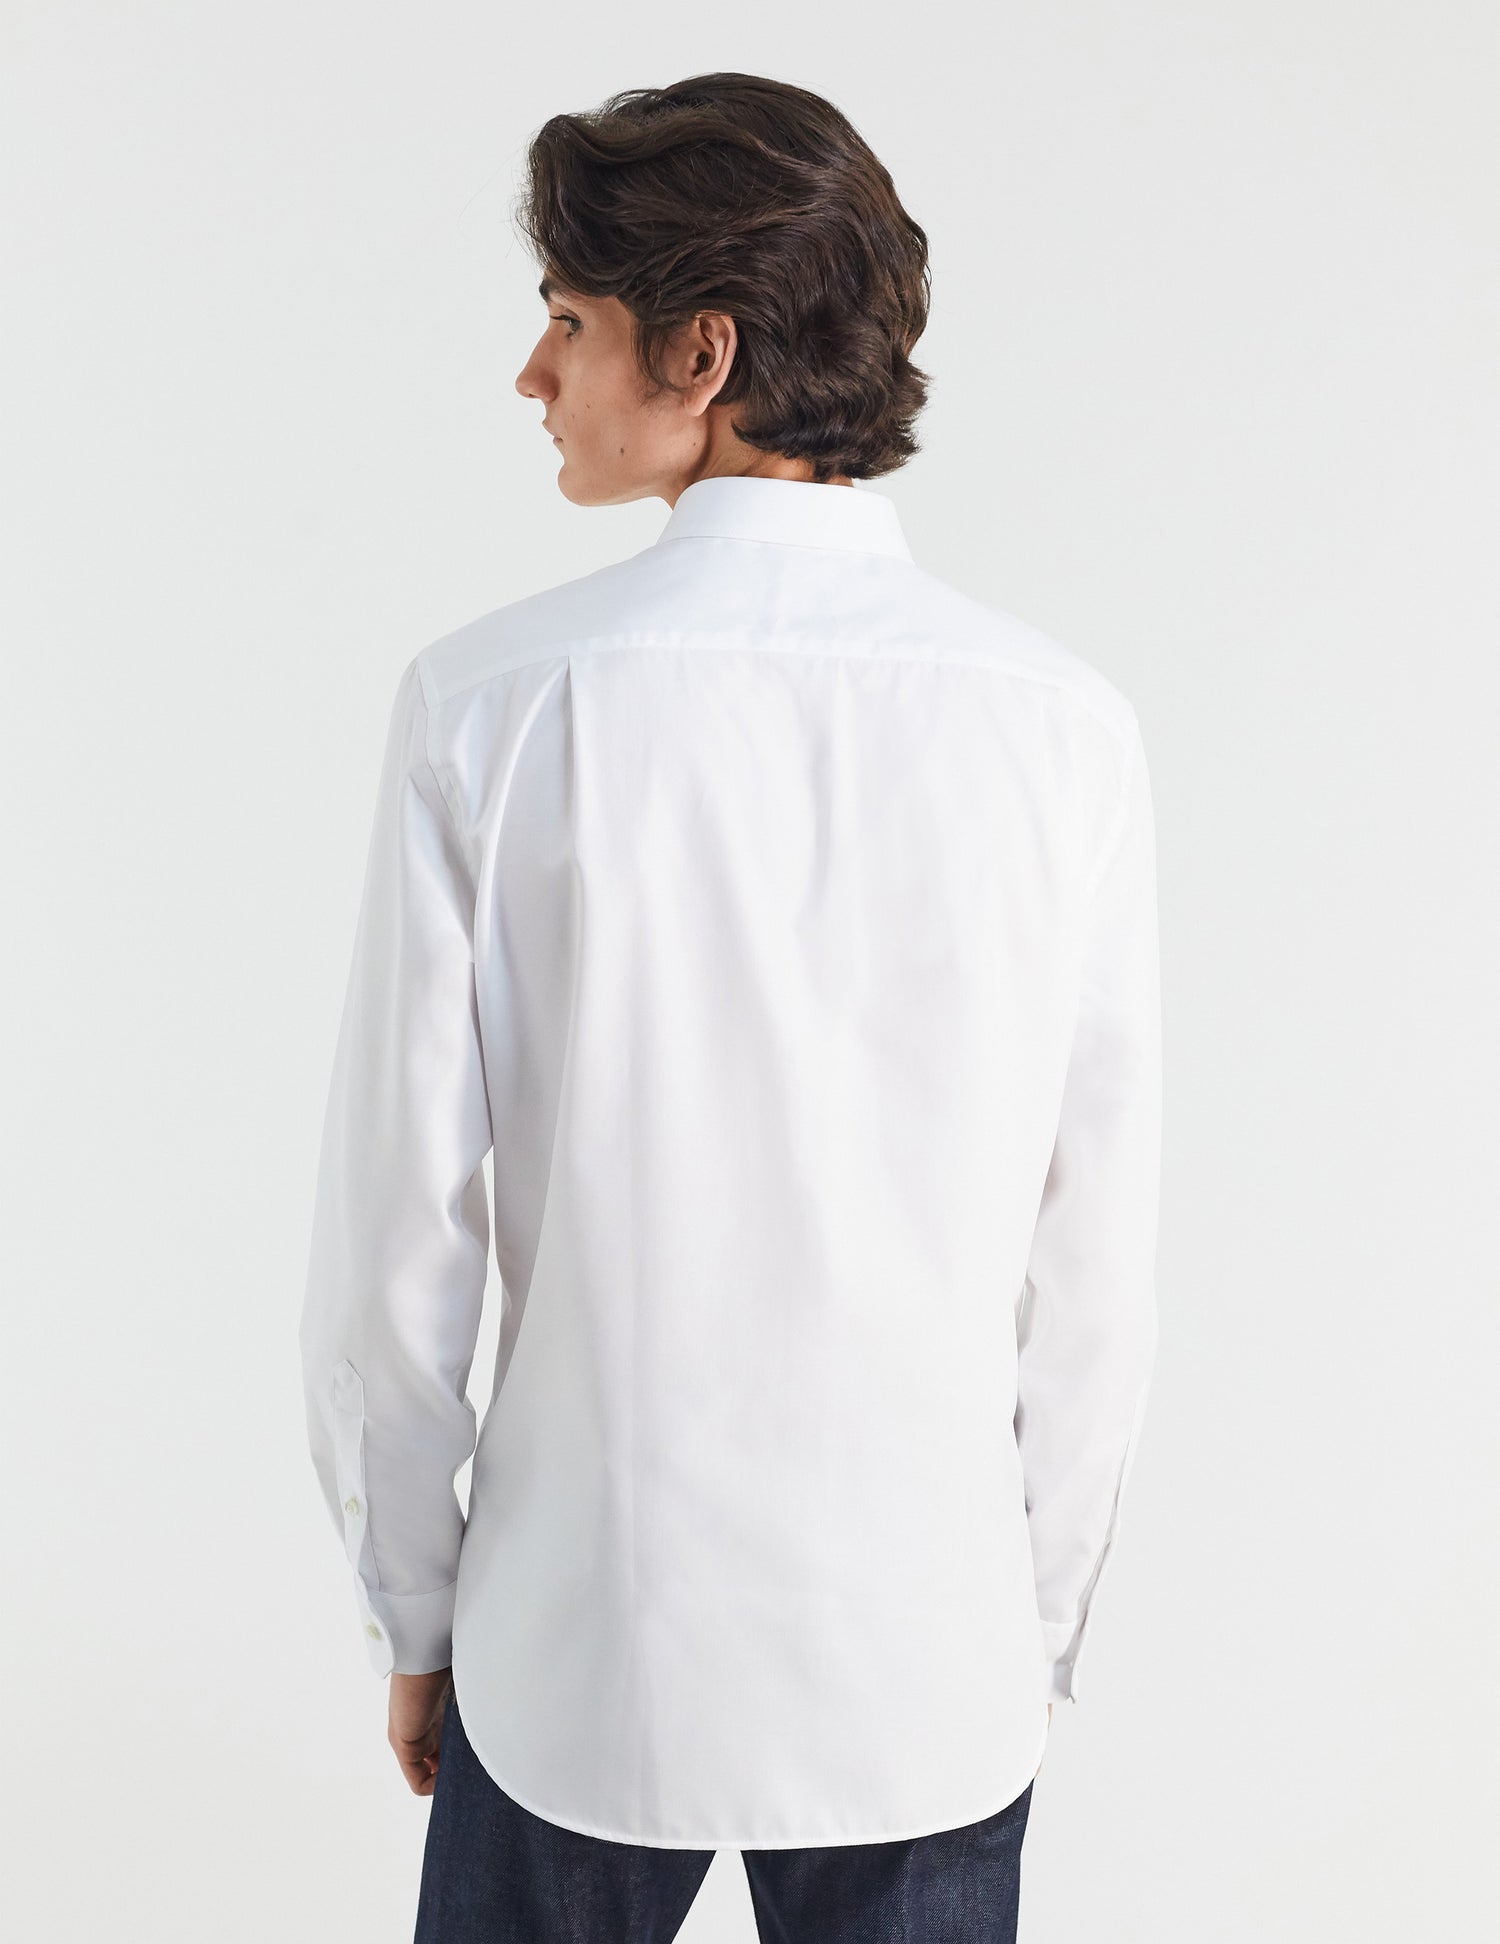 Classic white shirt - Shaped - Figaret Collar#4